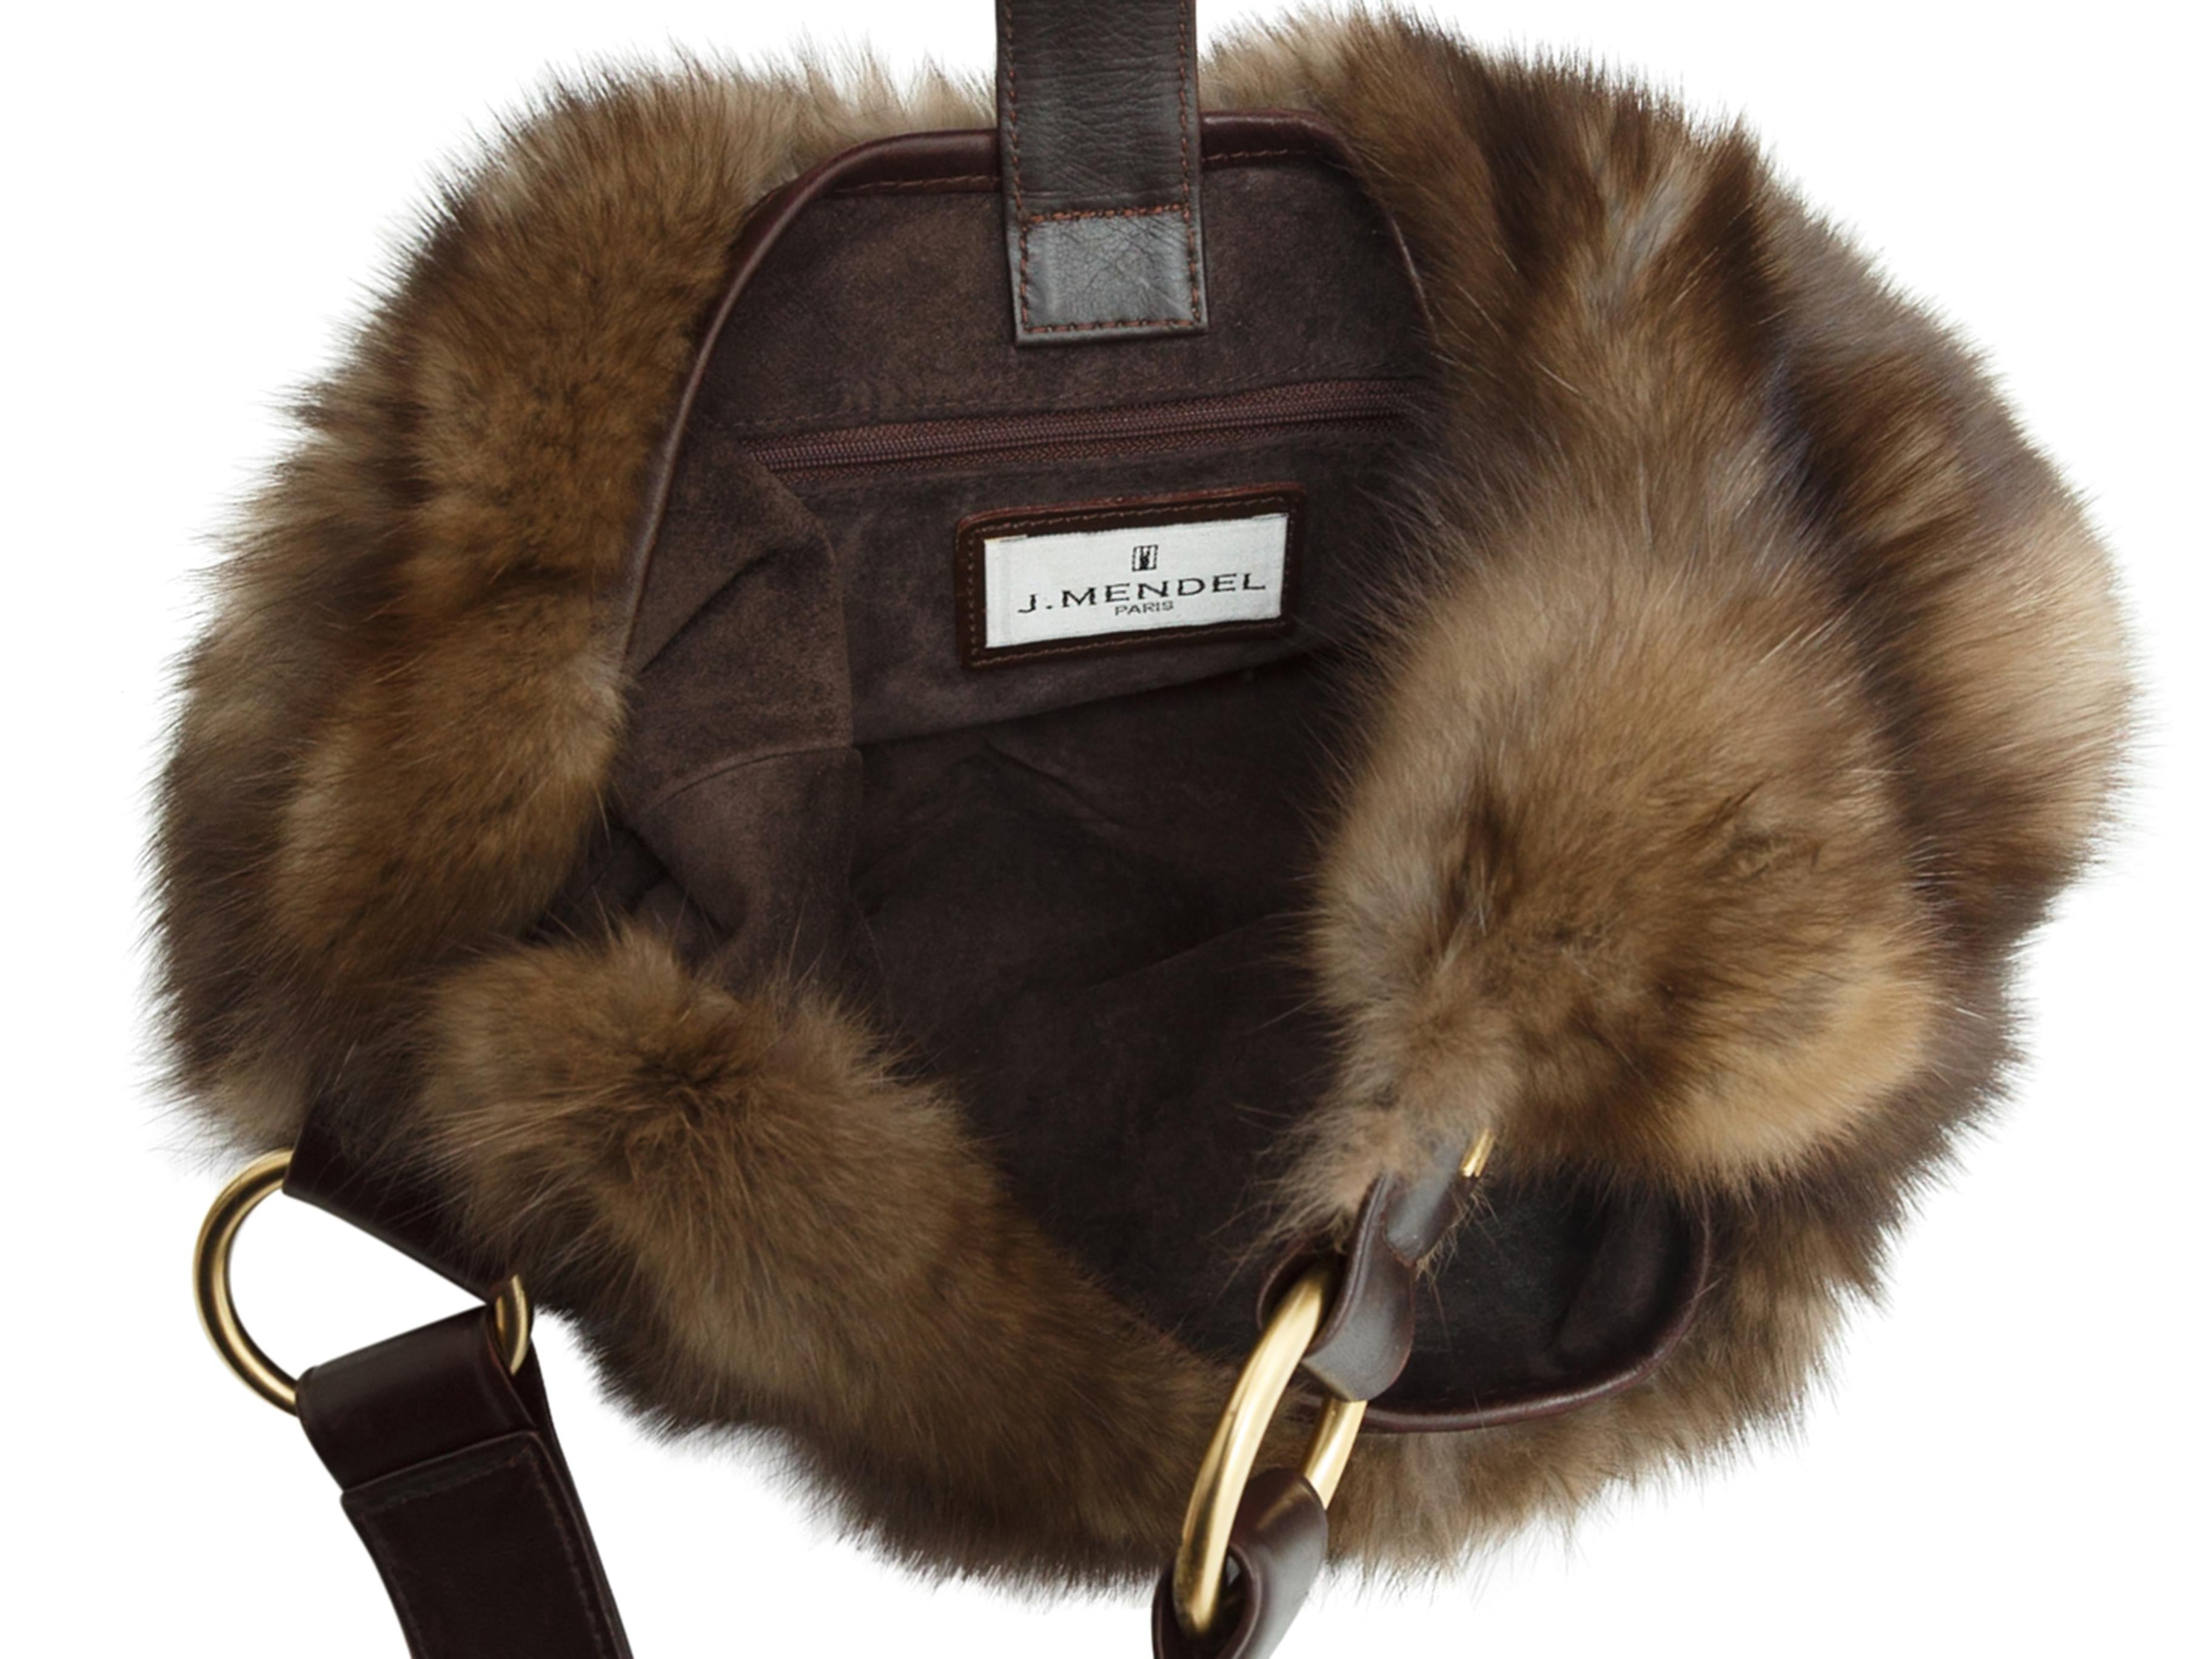 Product details: Brown sable fur shoulder bag by J. Mendel. Tonal leather strap and trim. Gold-tone hardware. Interior zip pocket. Swarovski crystal closure at front. 14'' width, 12'' length, 8'' depth, 13'' shoulder drop.
Condition: Pre-owned. Very